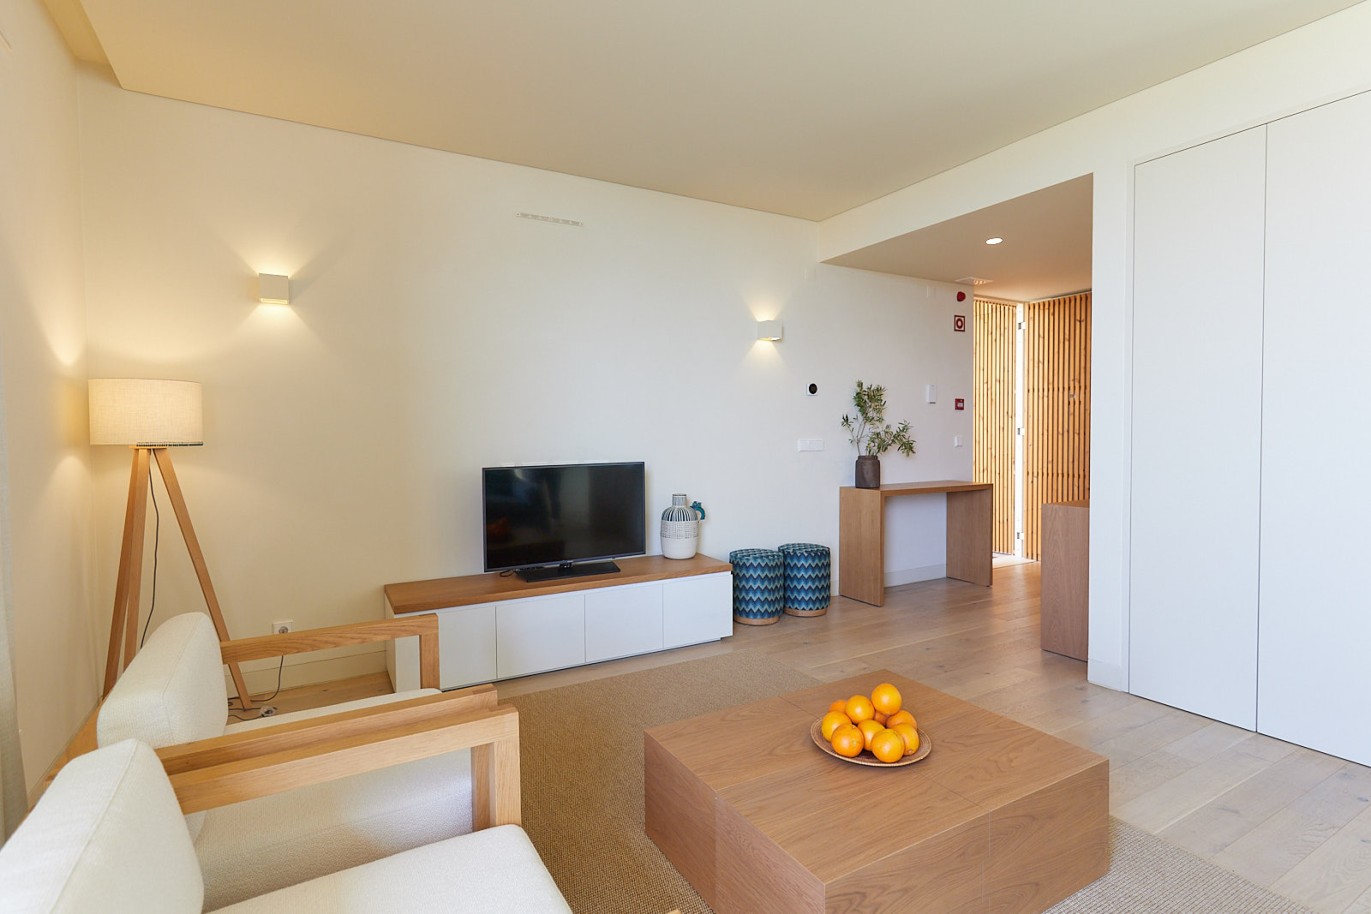 2 bedroom apartment in resort, for sale in Porches, Algarve_229081